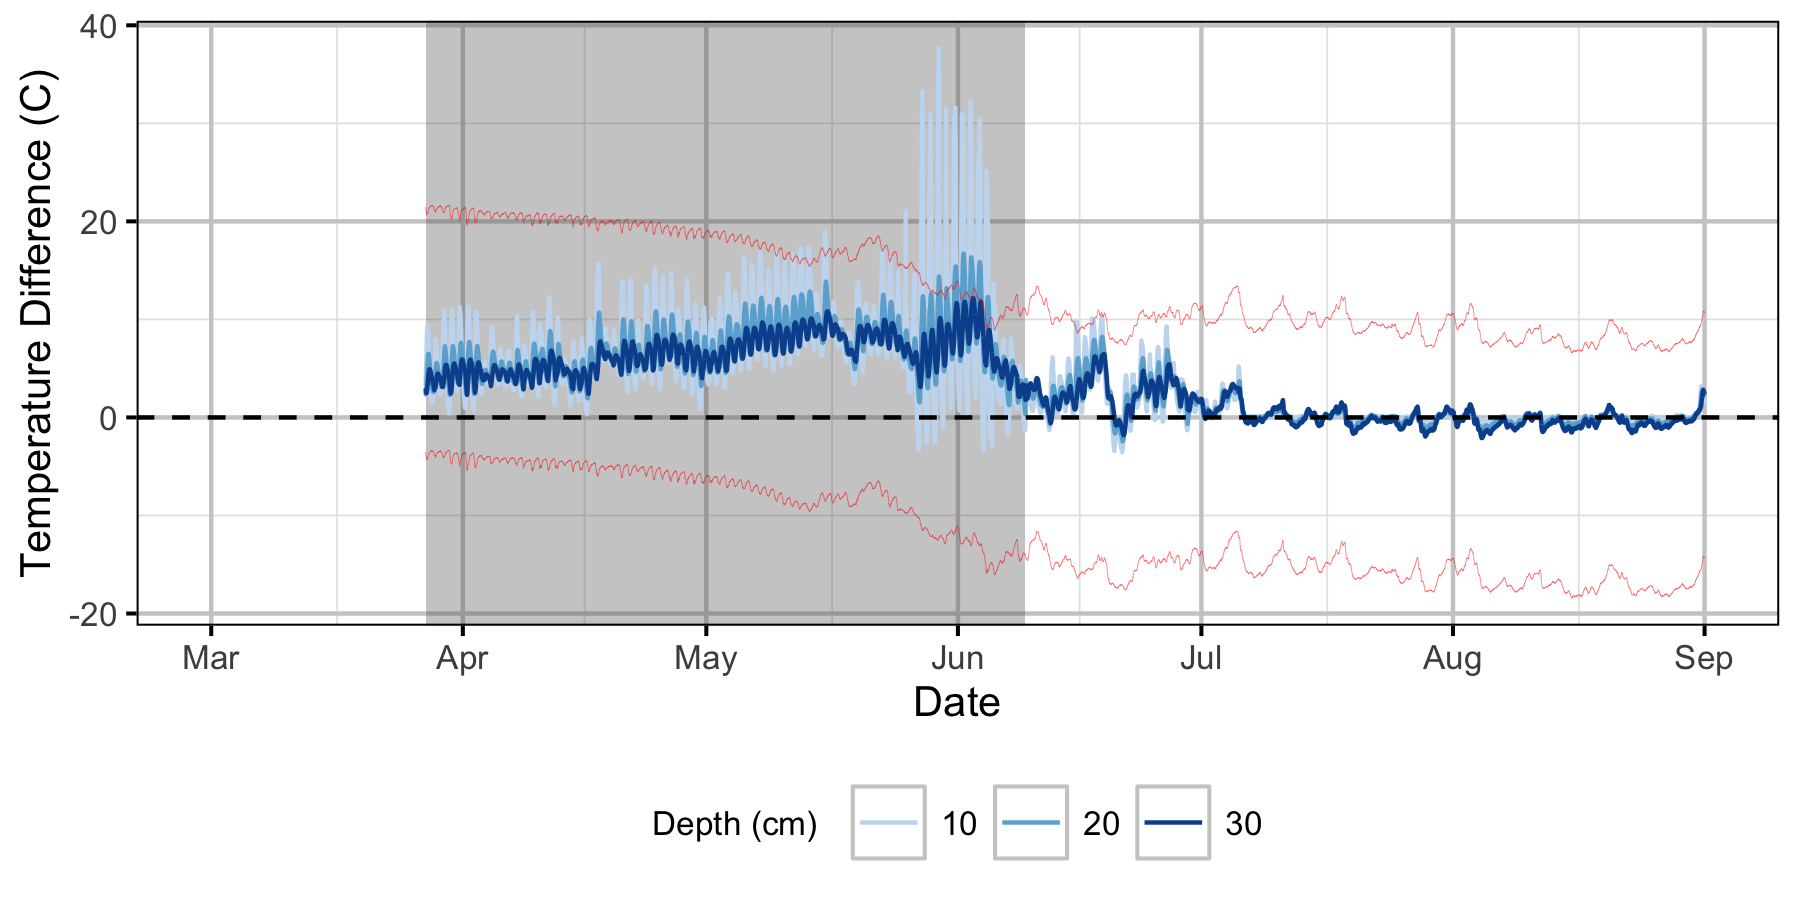 figures/Sensor Data/Relative Gravel Temperature Stations/Norns Creek Fan/Station11.png